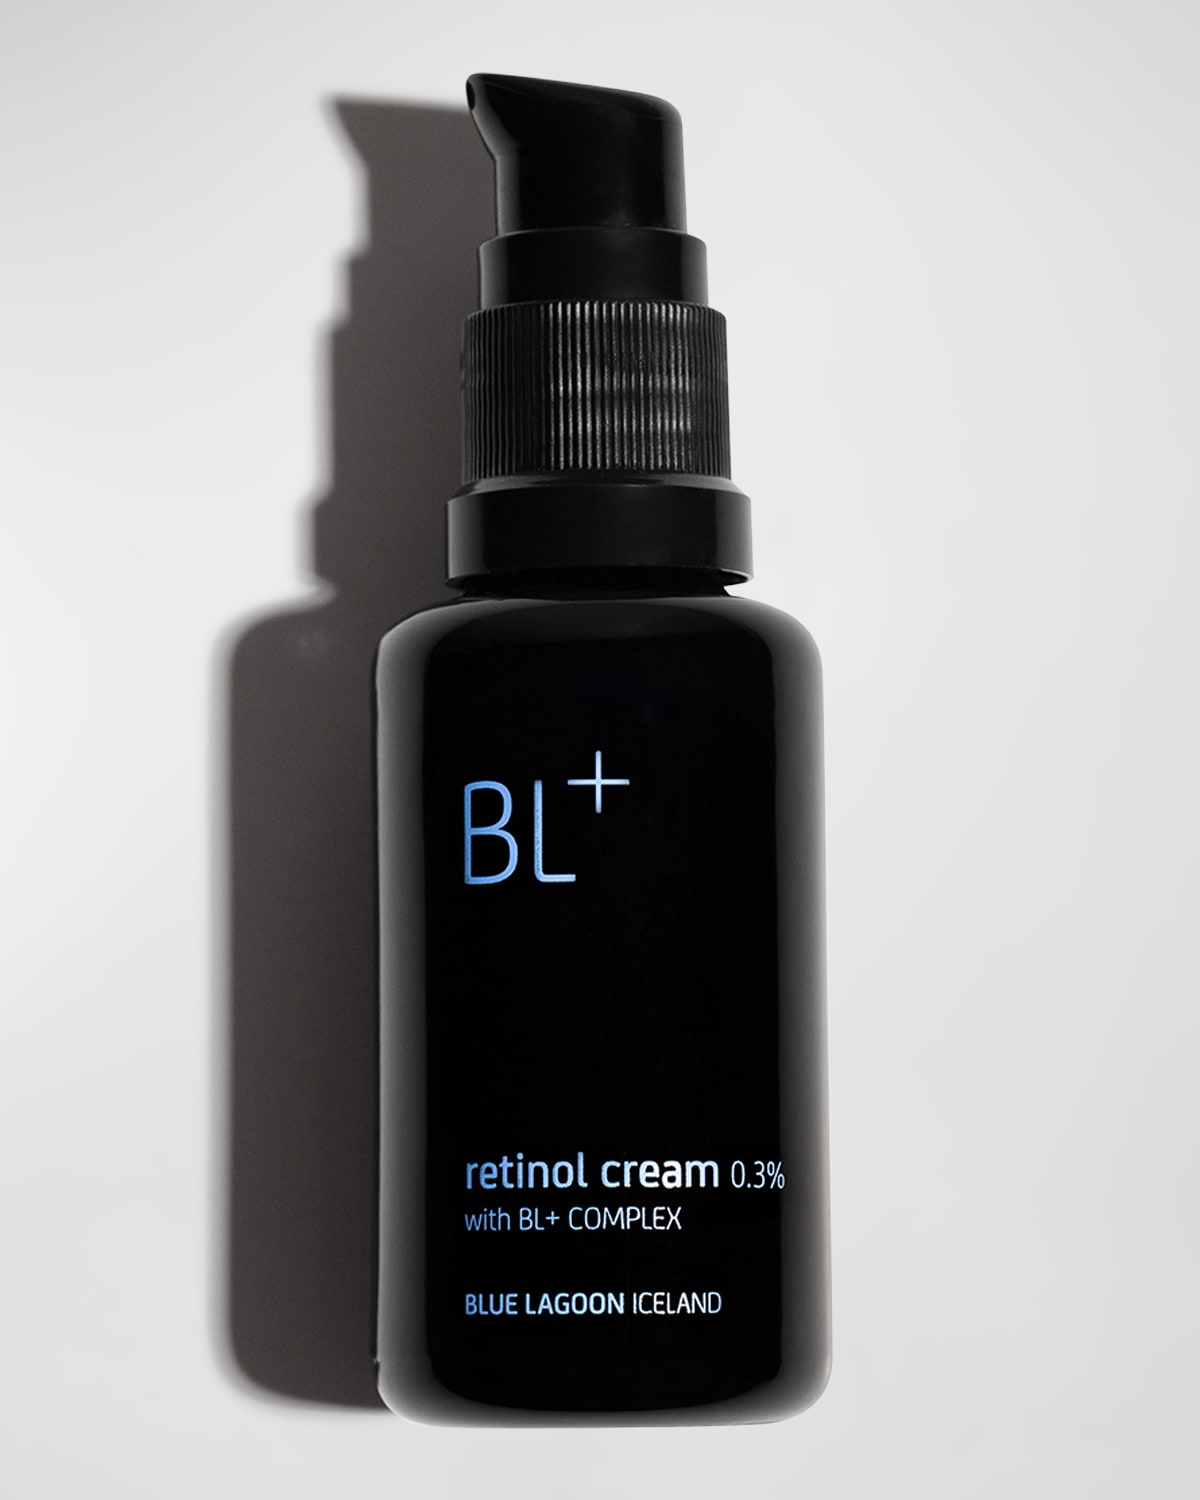 BL+ Retinol Cream 0.3%, 1 oz.